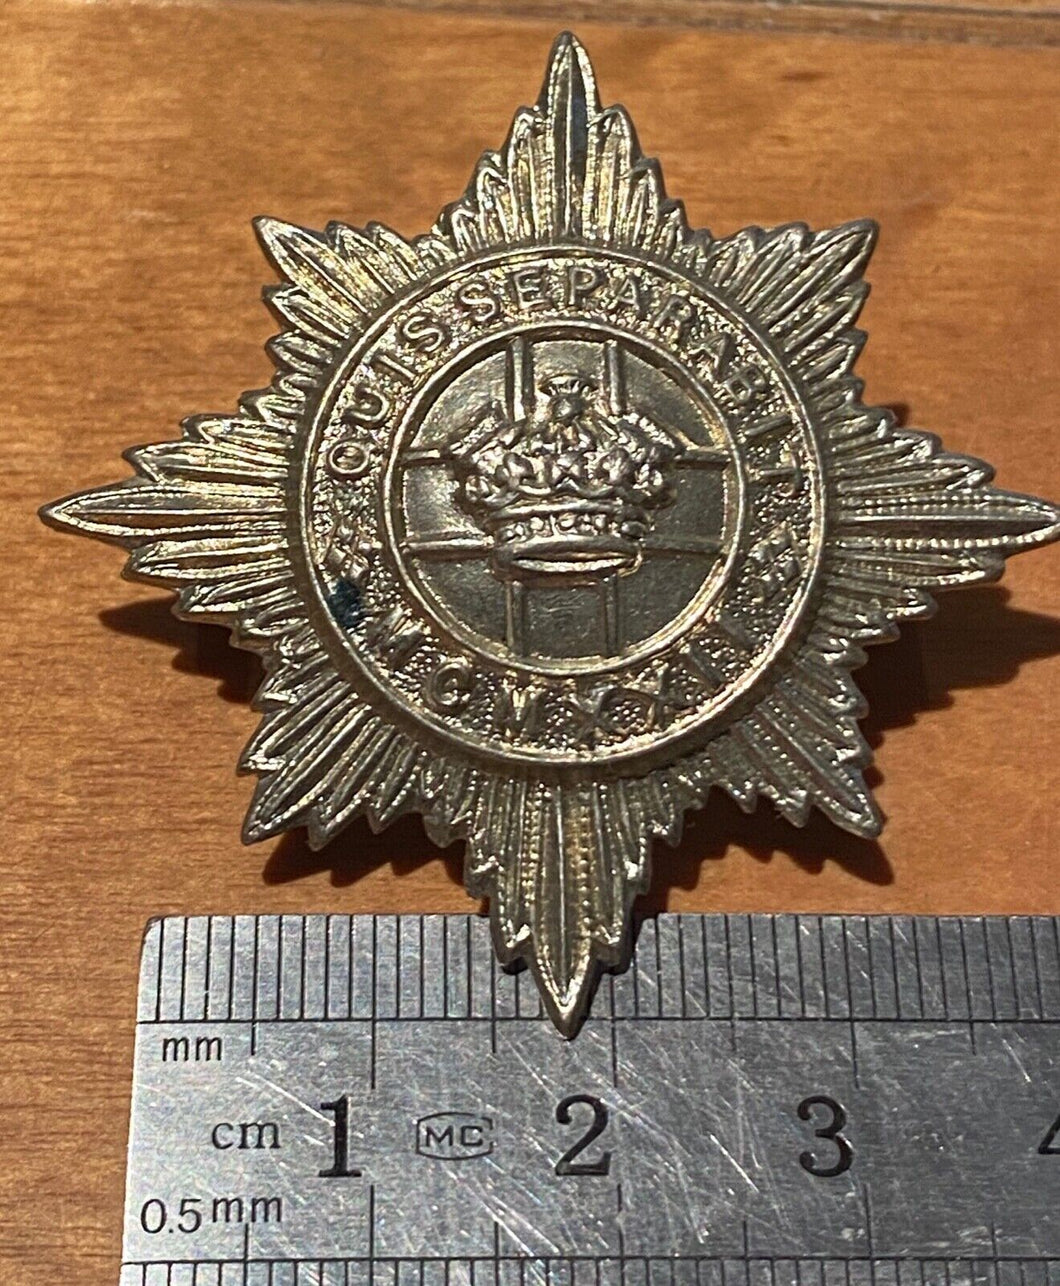 British Army Kings Crown - white metal 4th/7th Royal Dragoon Guards cap badge